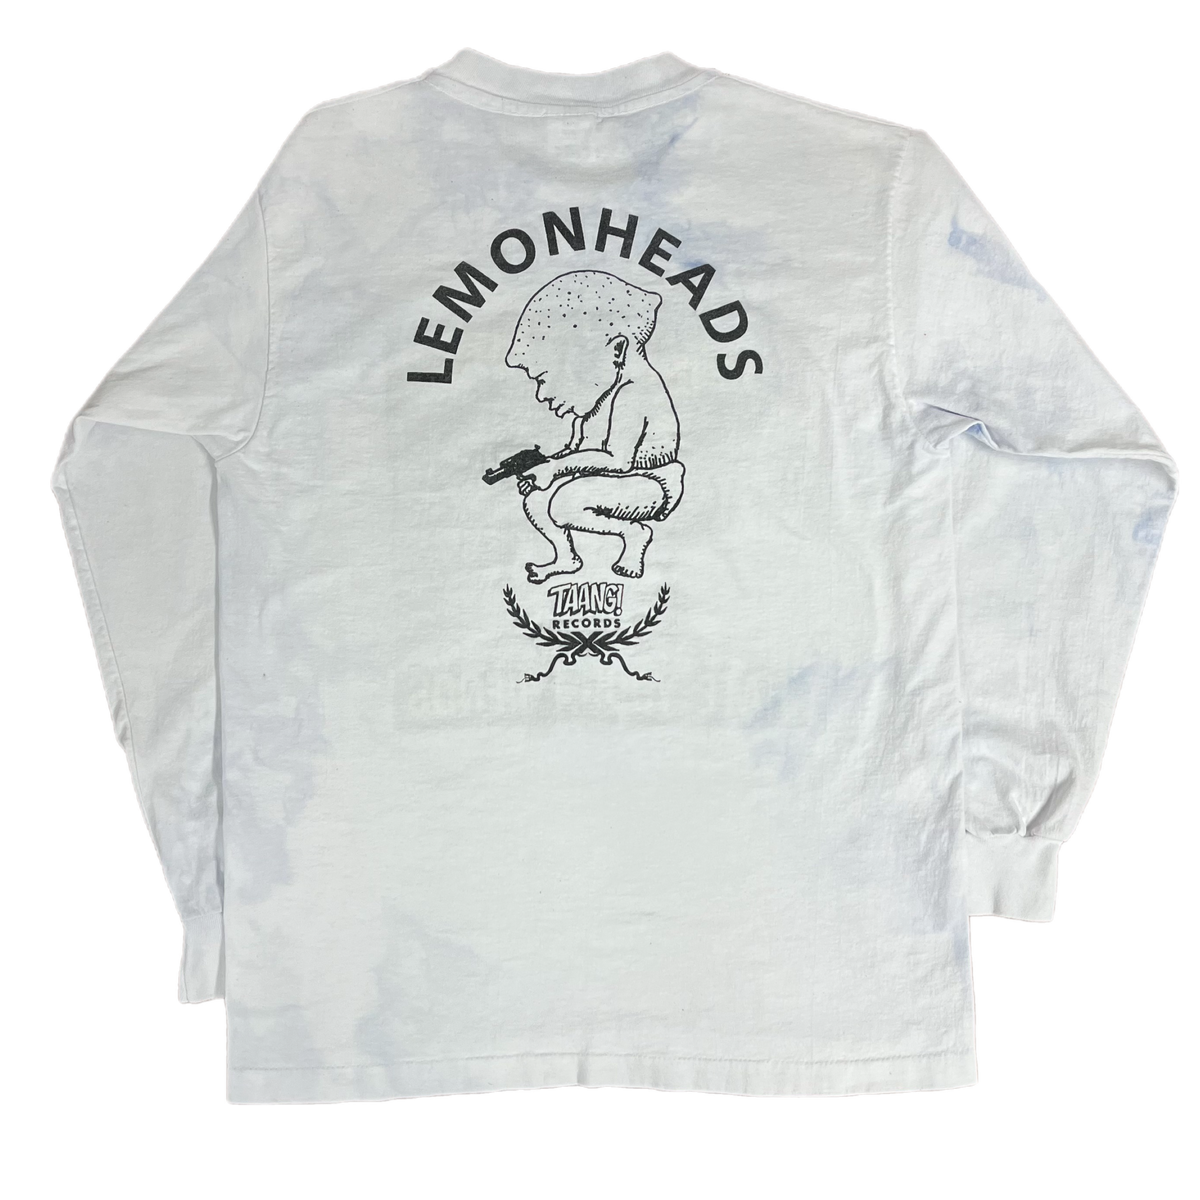 Vintage Lemonheads &quot;Hate Your Friends&quot; TAANG! Records Long Sleeve Shirt